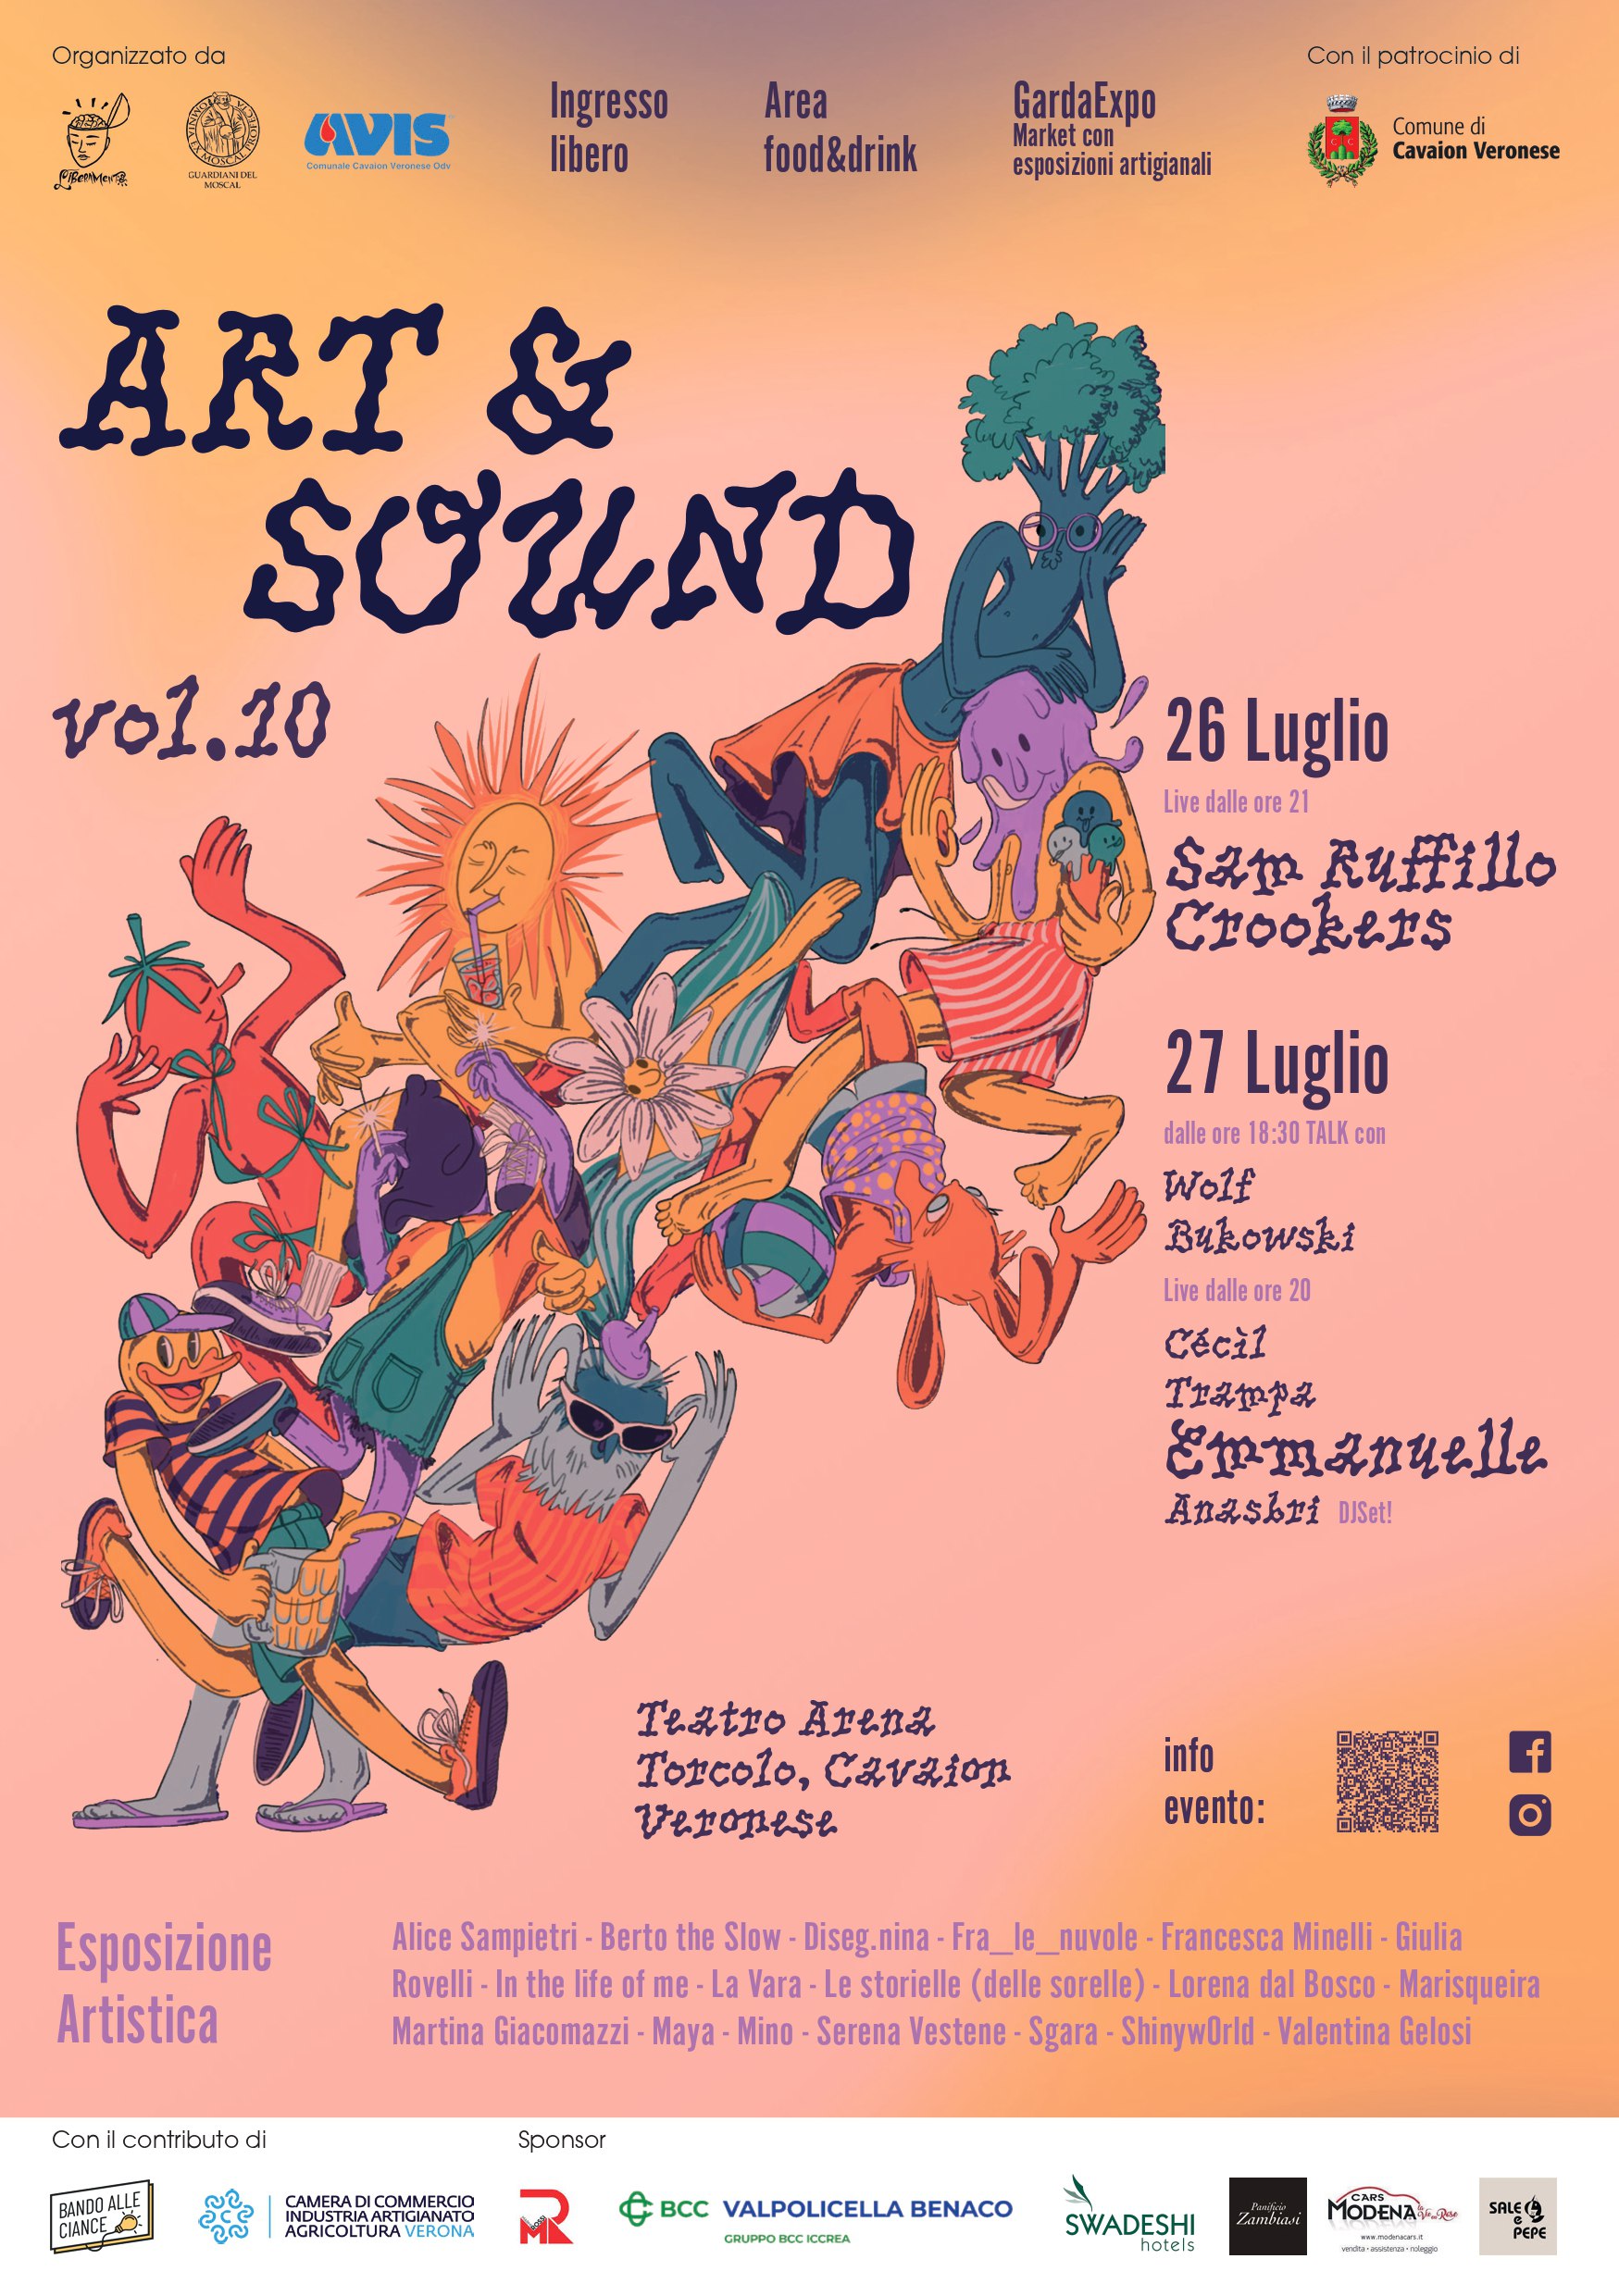 Art & Sound Vol. 10